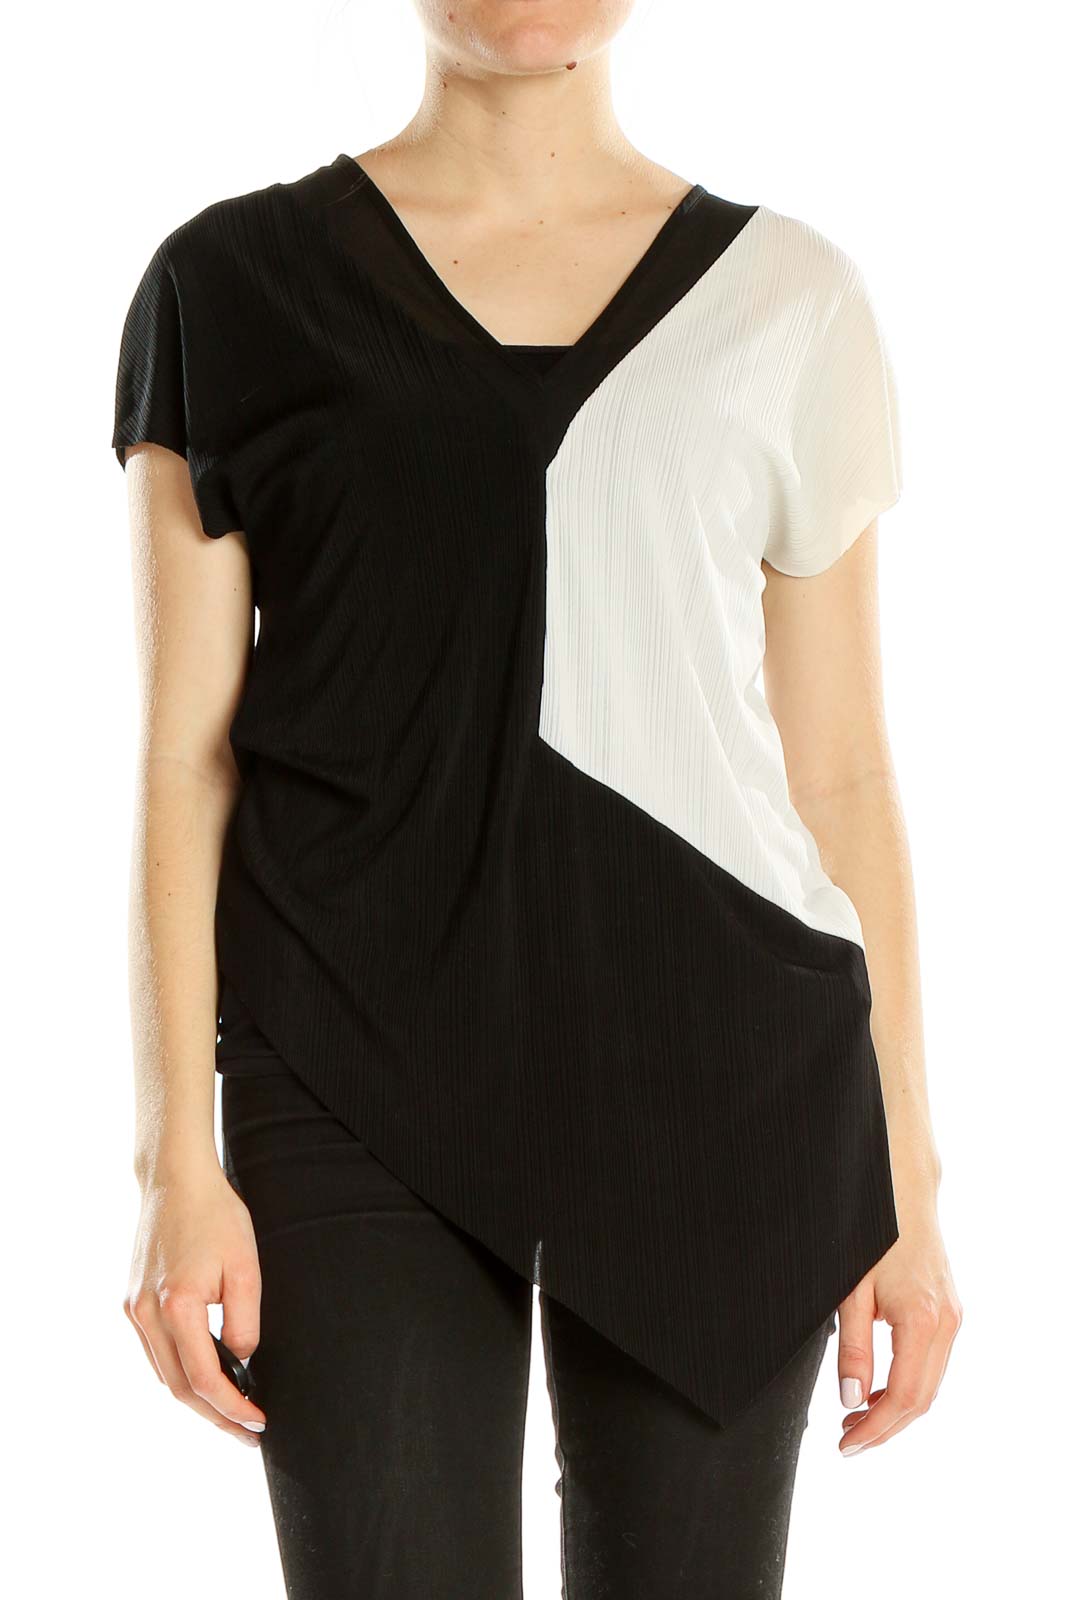 Black White Colorblock Chic Asymmetrical Blouse Front